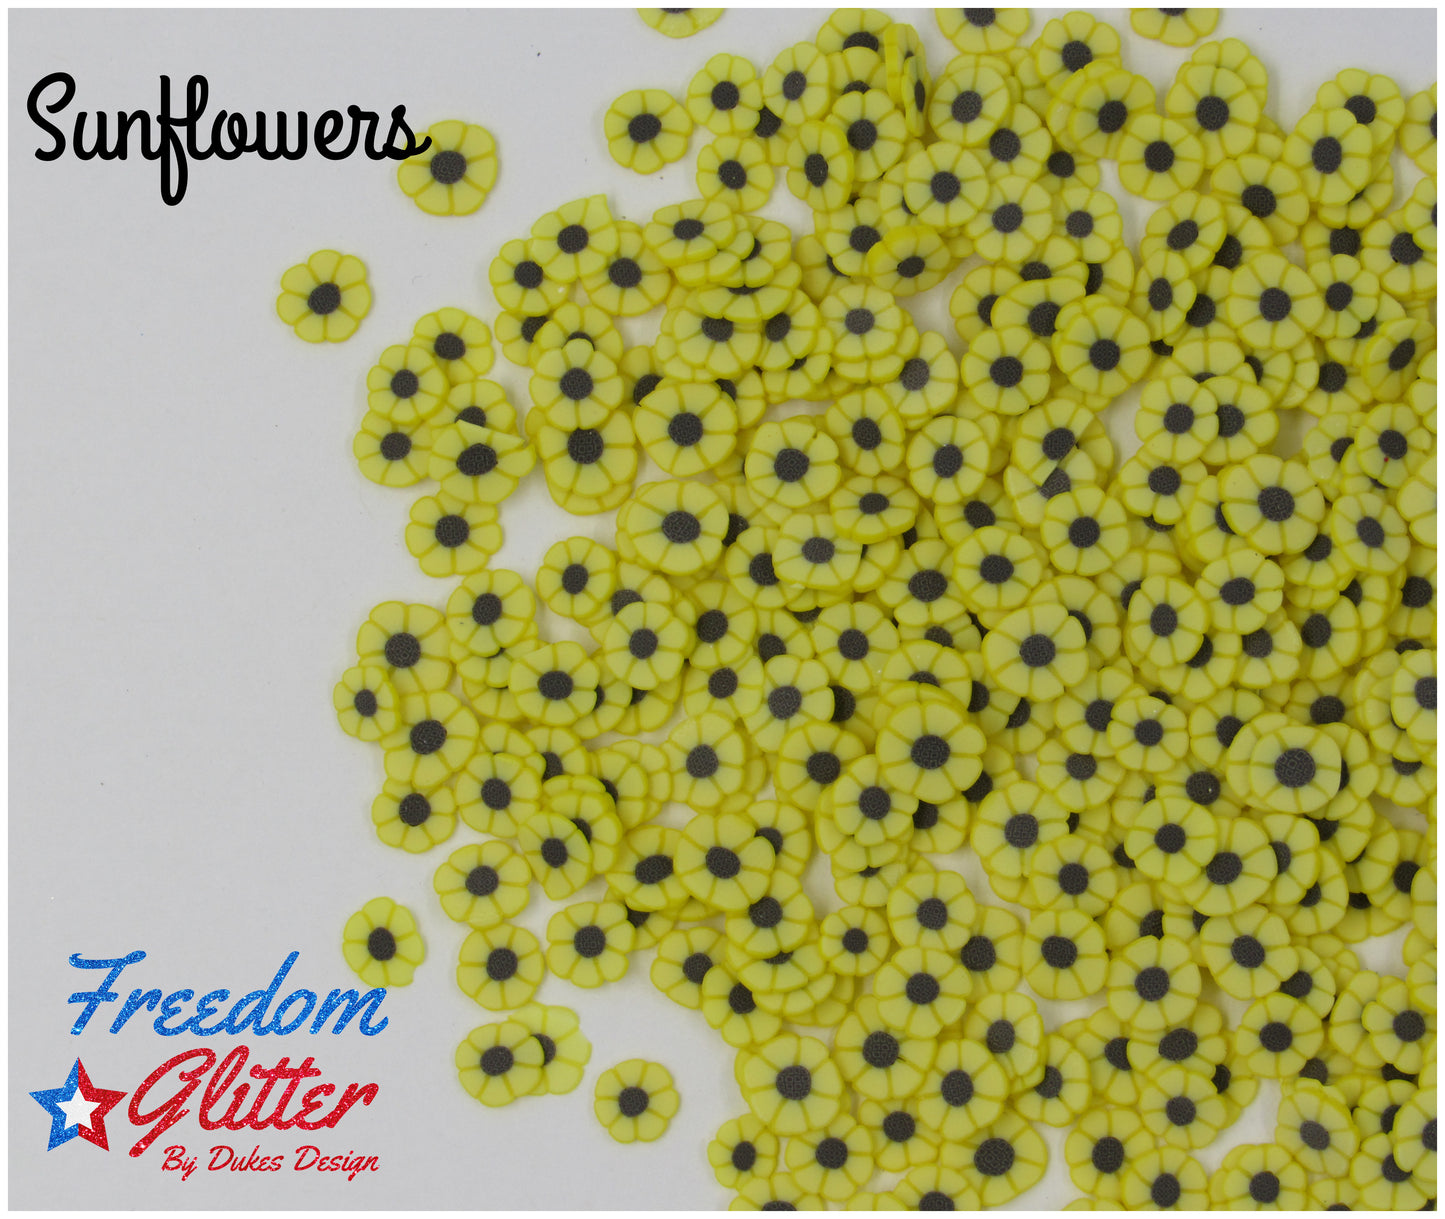 Sunflowers (Polymer Clay)